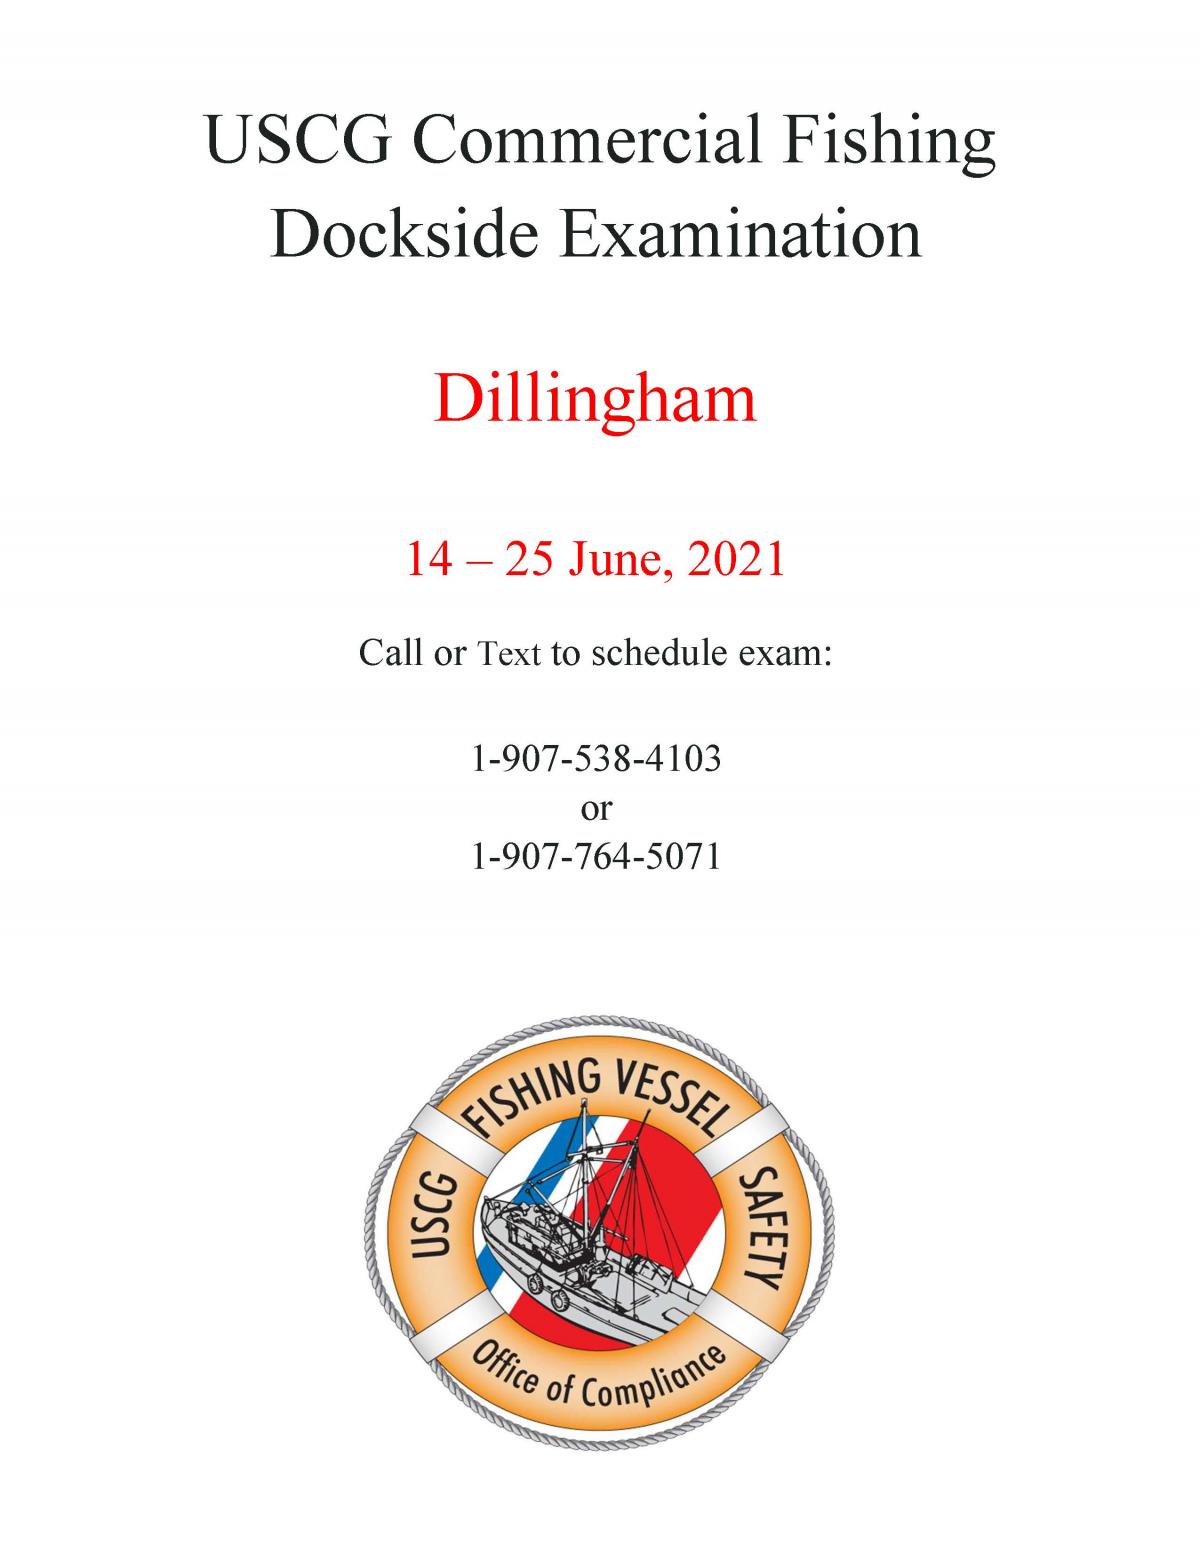 USCG Commercial Fishing Dockside Examinations in Dillingham June 14 - 25